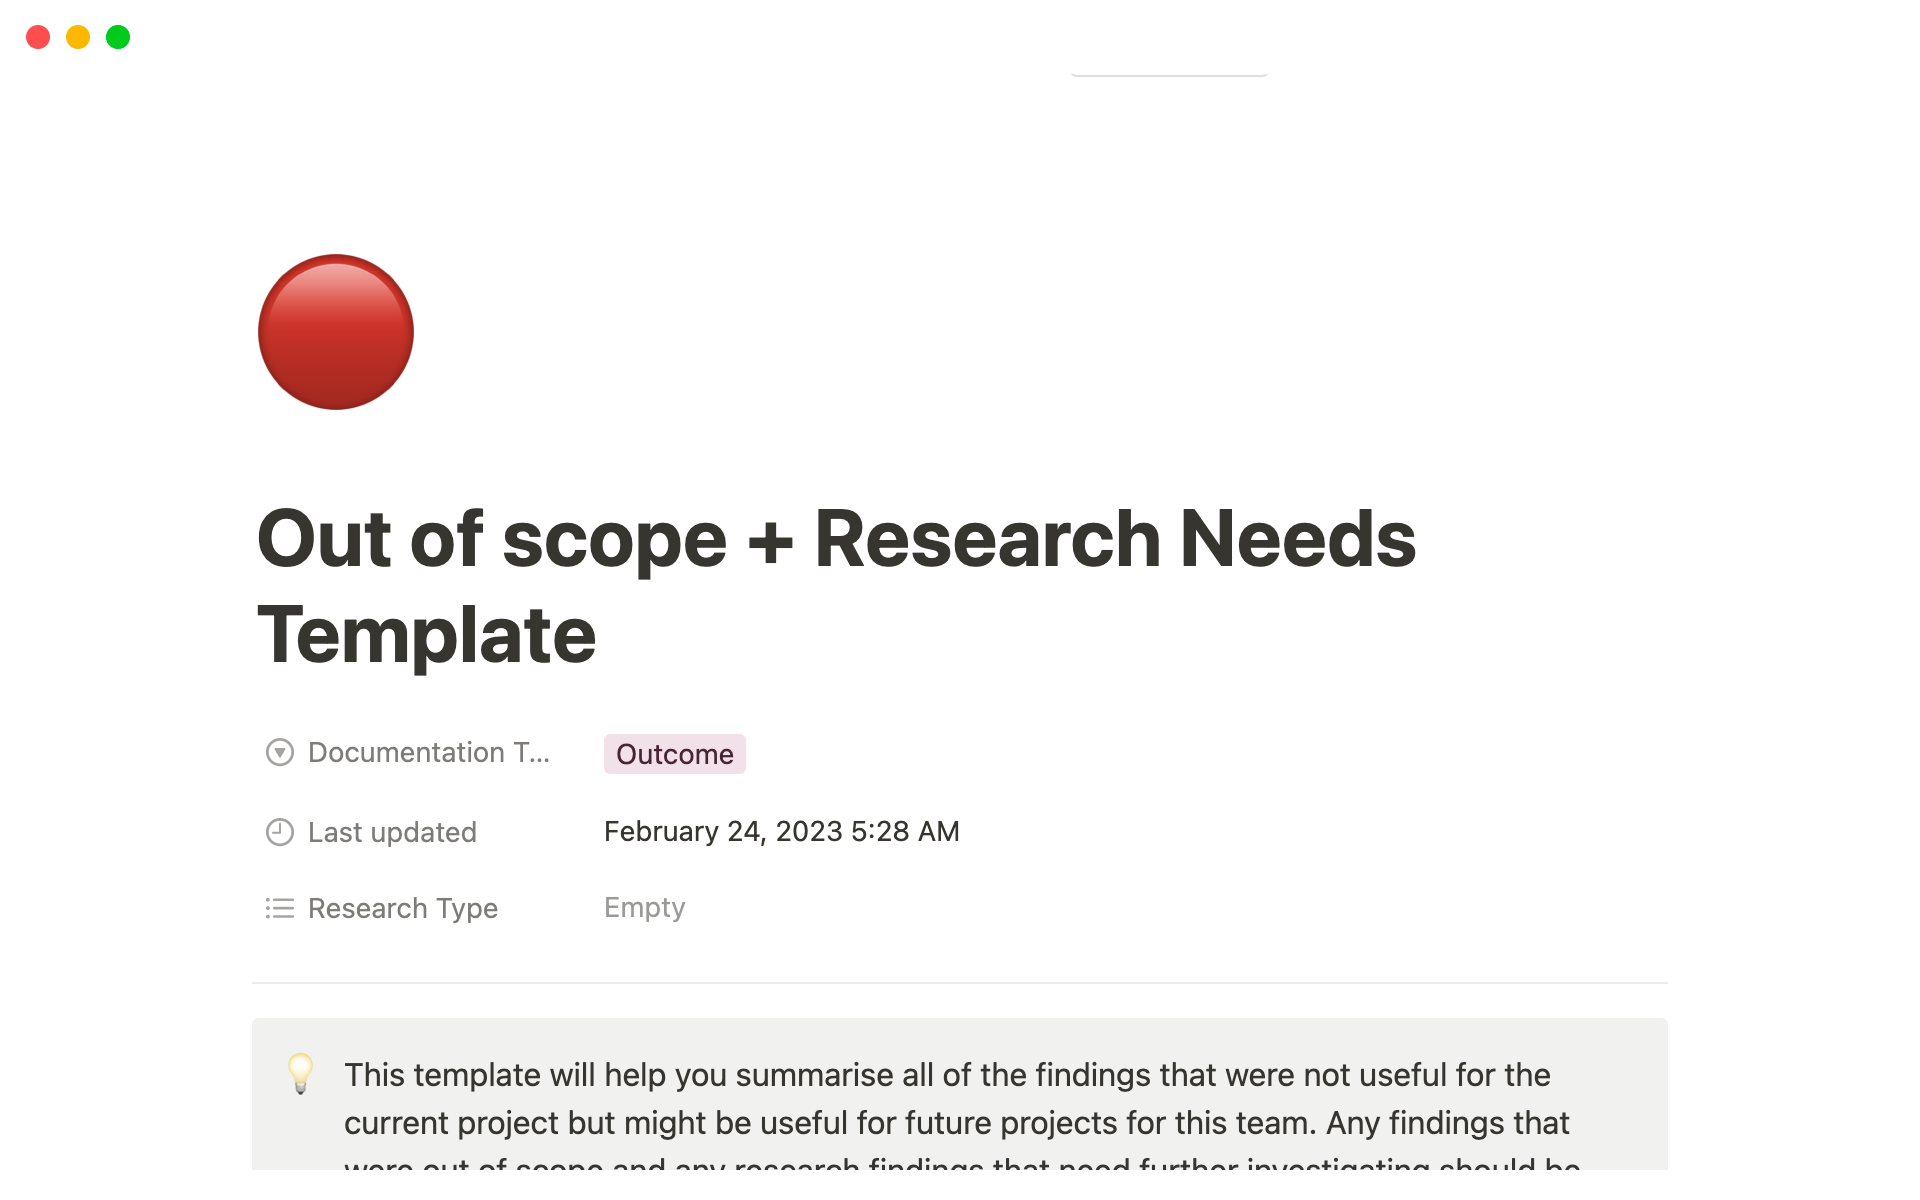 out-of-scope-research-needs-template-odette-jansen-desktop